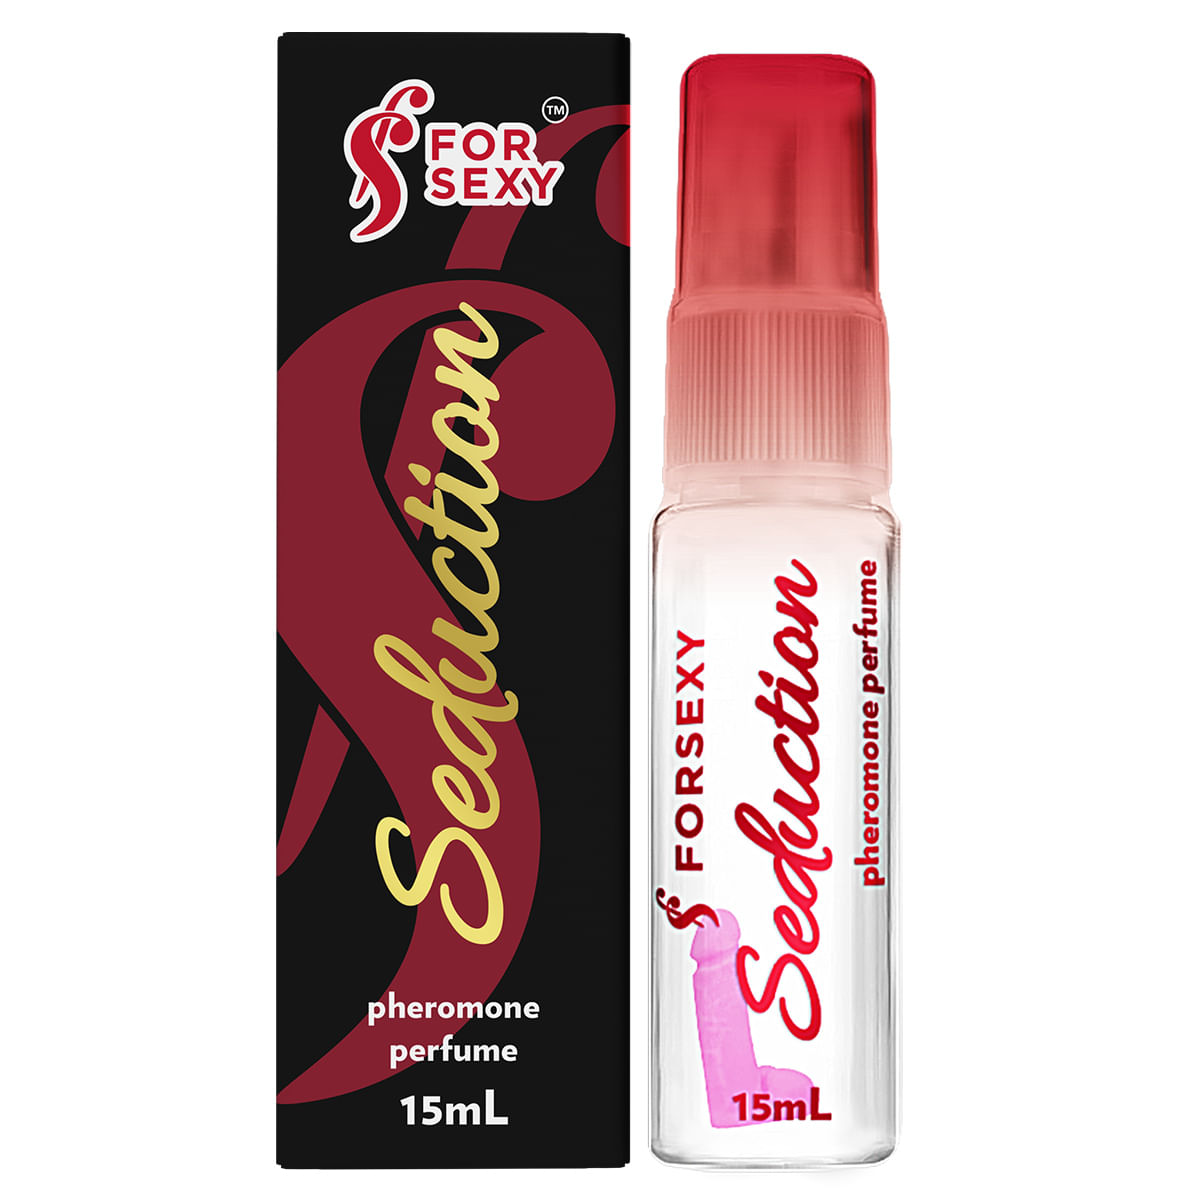 Seduction Pheromone Perfume Feminino 15ml For Sexy